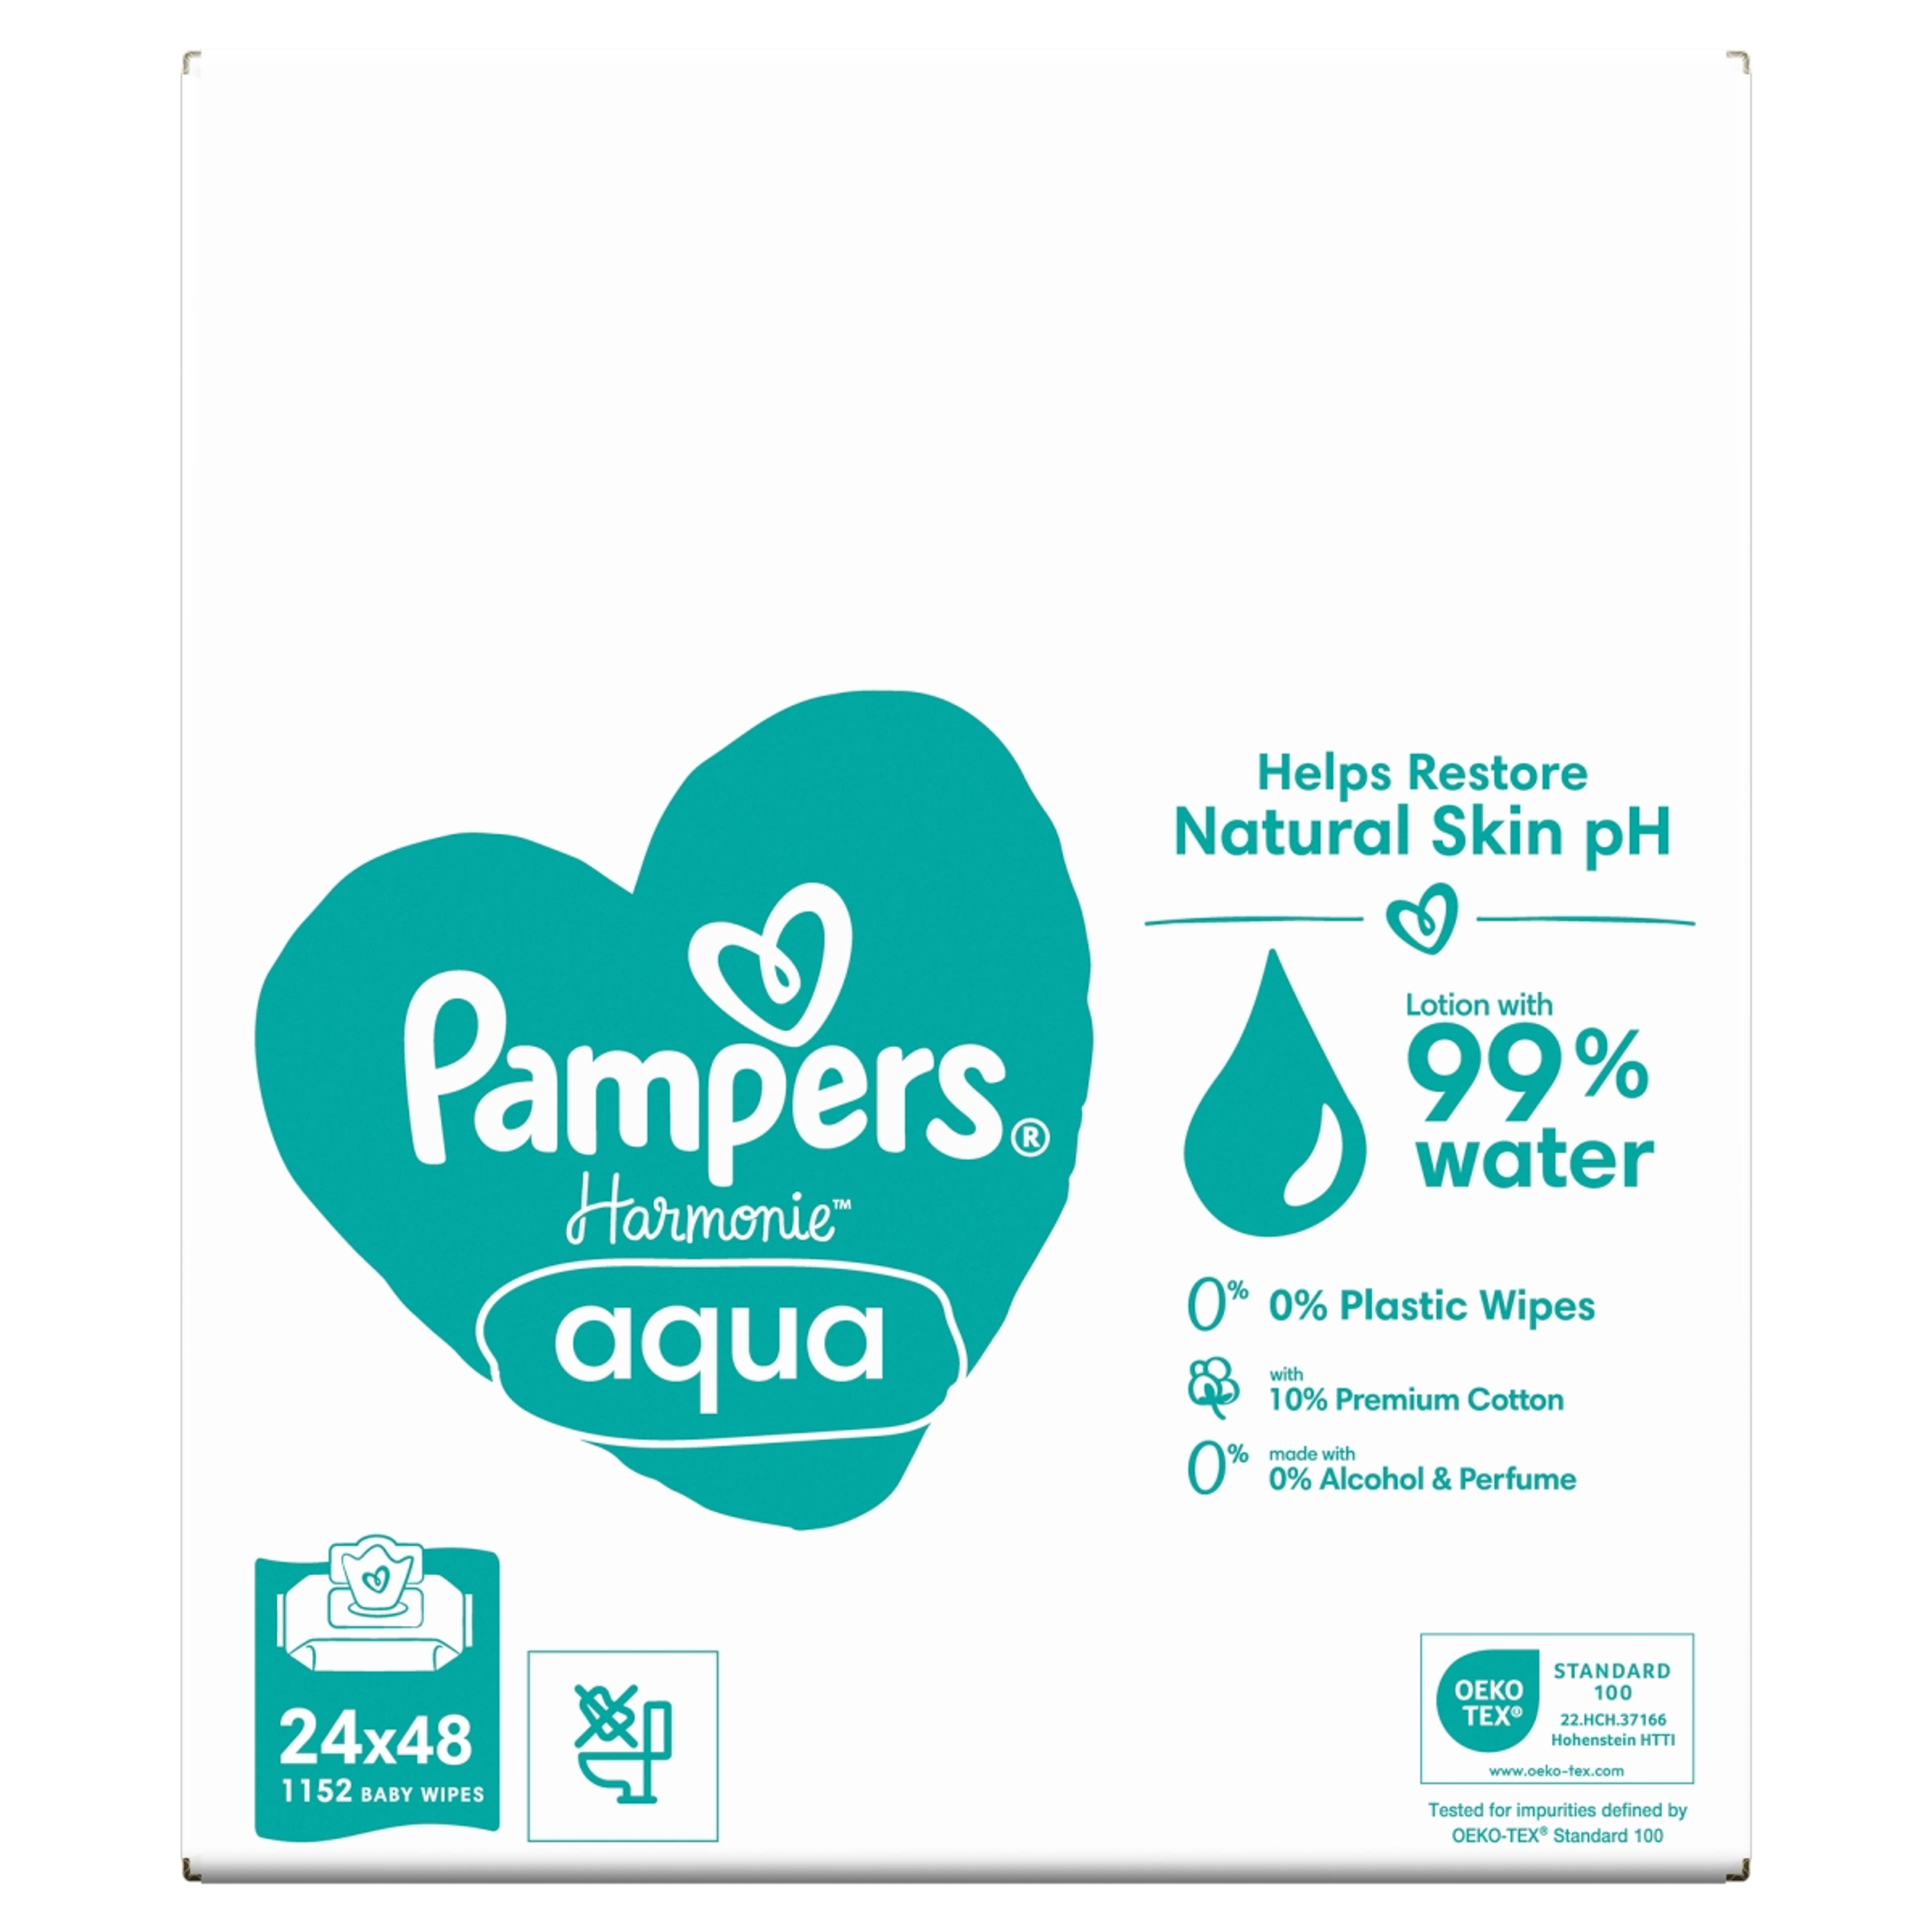 Pampers Harmonie Aqua nedves törlőkendő 24x 48 db - 1152 db-1